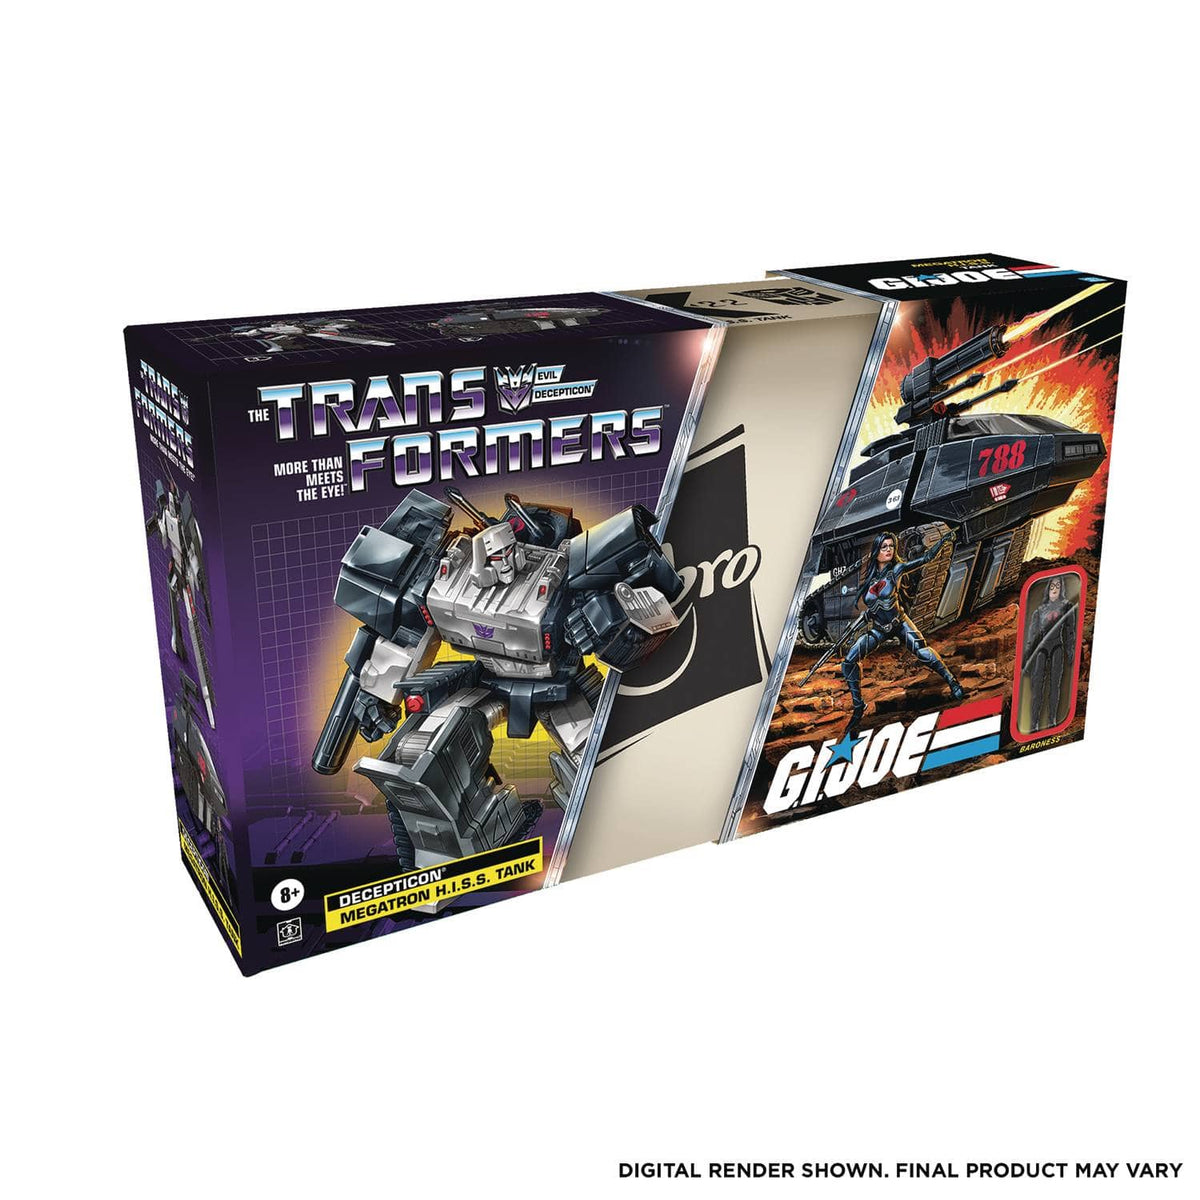 Hasbro: G.I. Joe x Transformers - Megatron, Hiss Tank - Third Eye